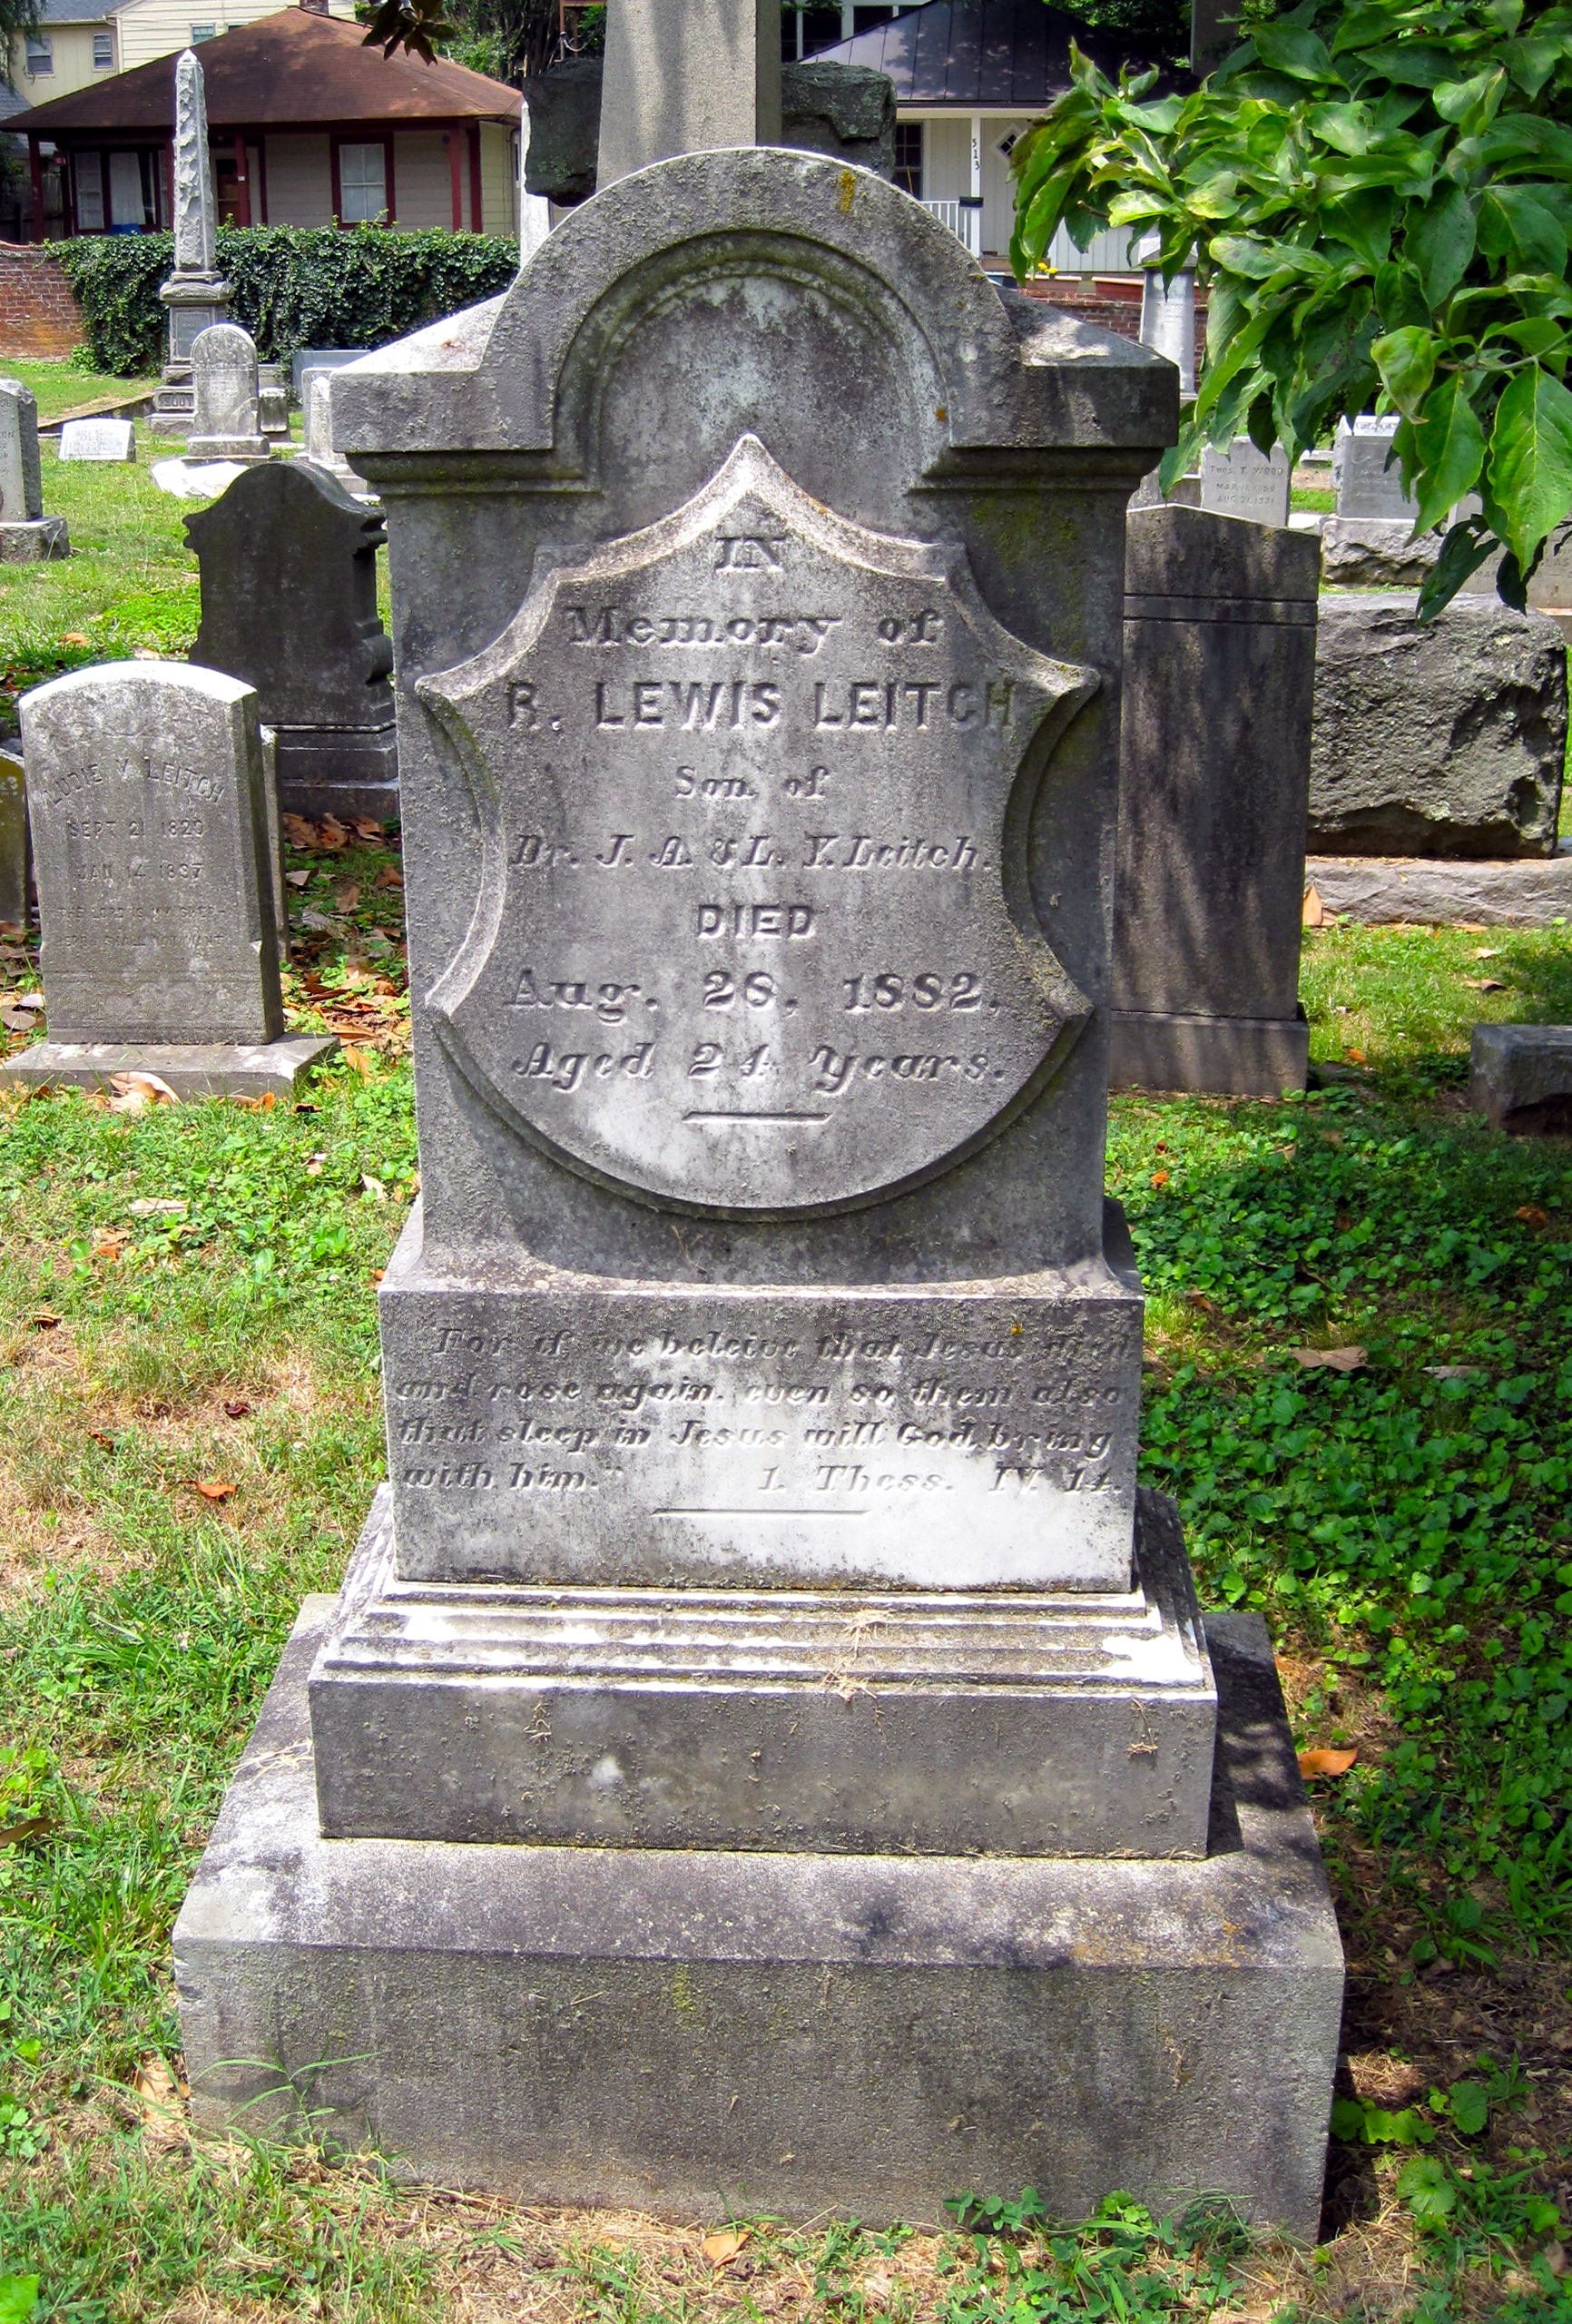 R. Lewis Leitch grave marker